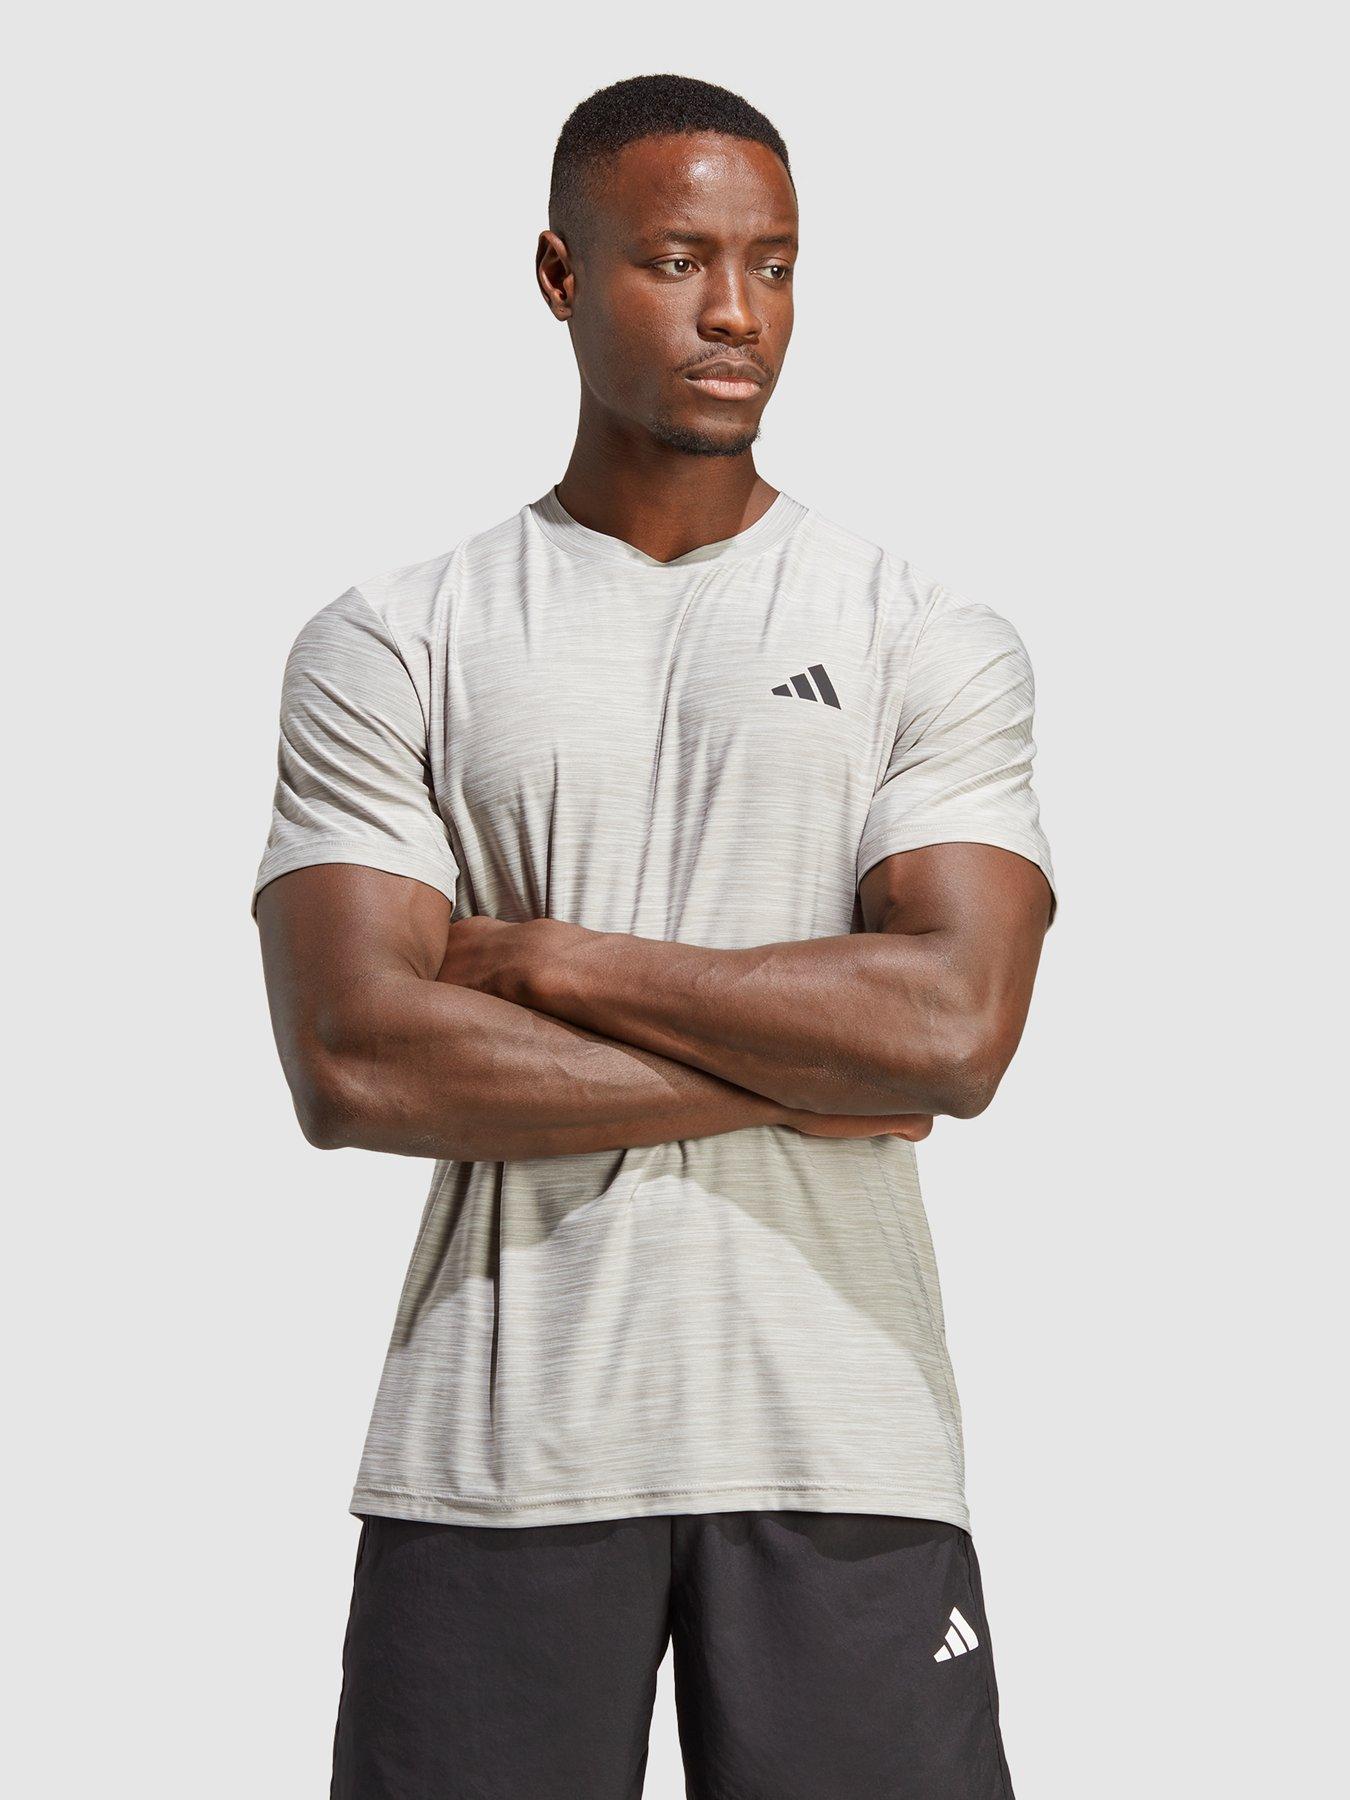 Adidas Shirts | New Adidas Performance Sleeveless Compression Top | Color: Black | Size: XXL | Bookboothe's Closet